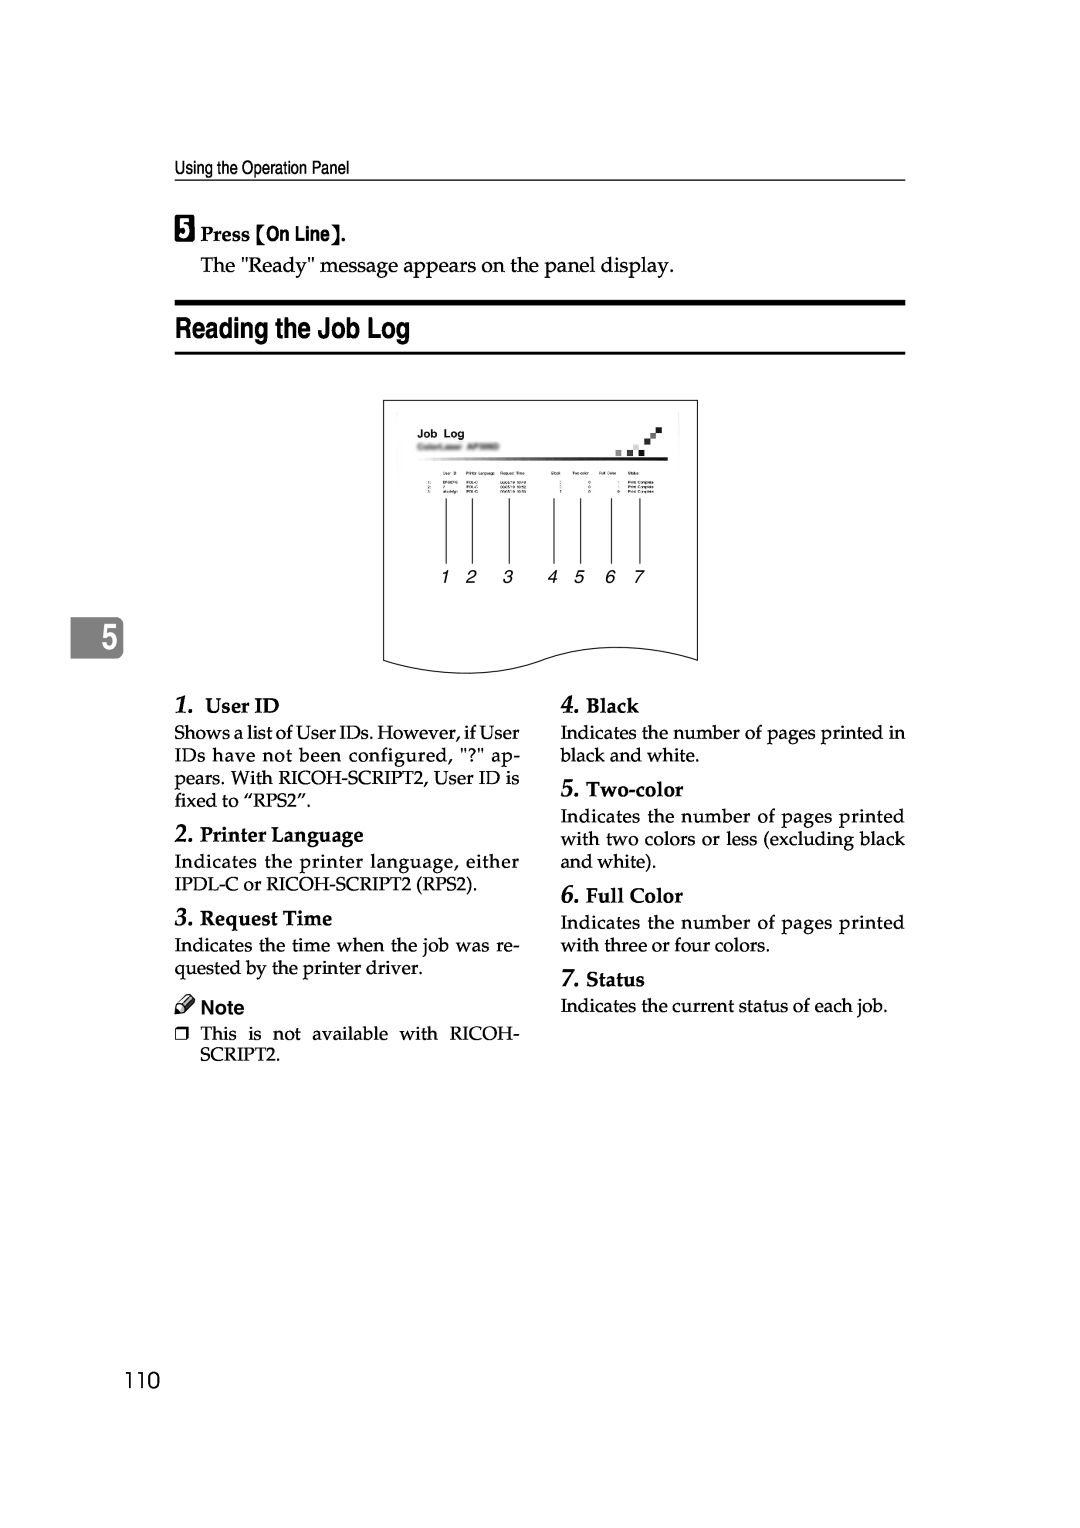 Lanier AP206 manual Reading the Job Log, User ID, Printer Language, Request Time, Black, Two-color, Full Color, Status 